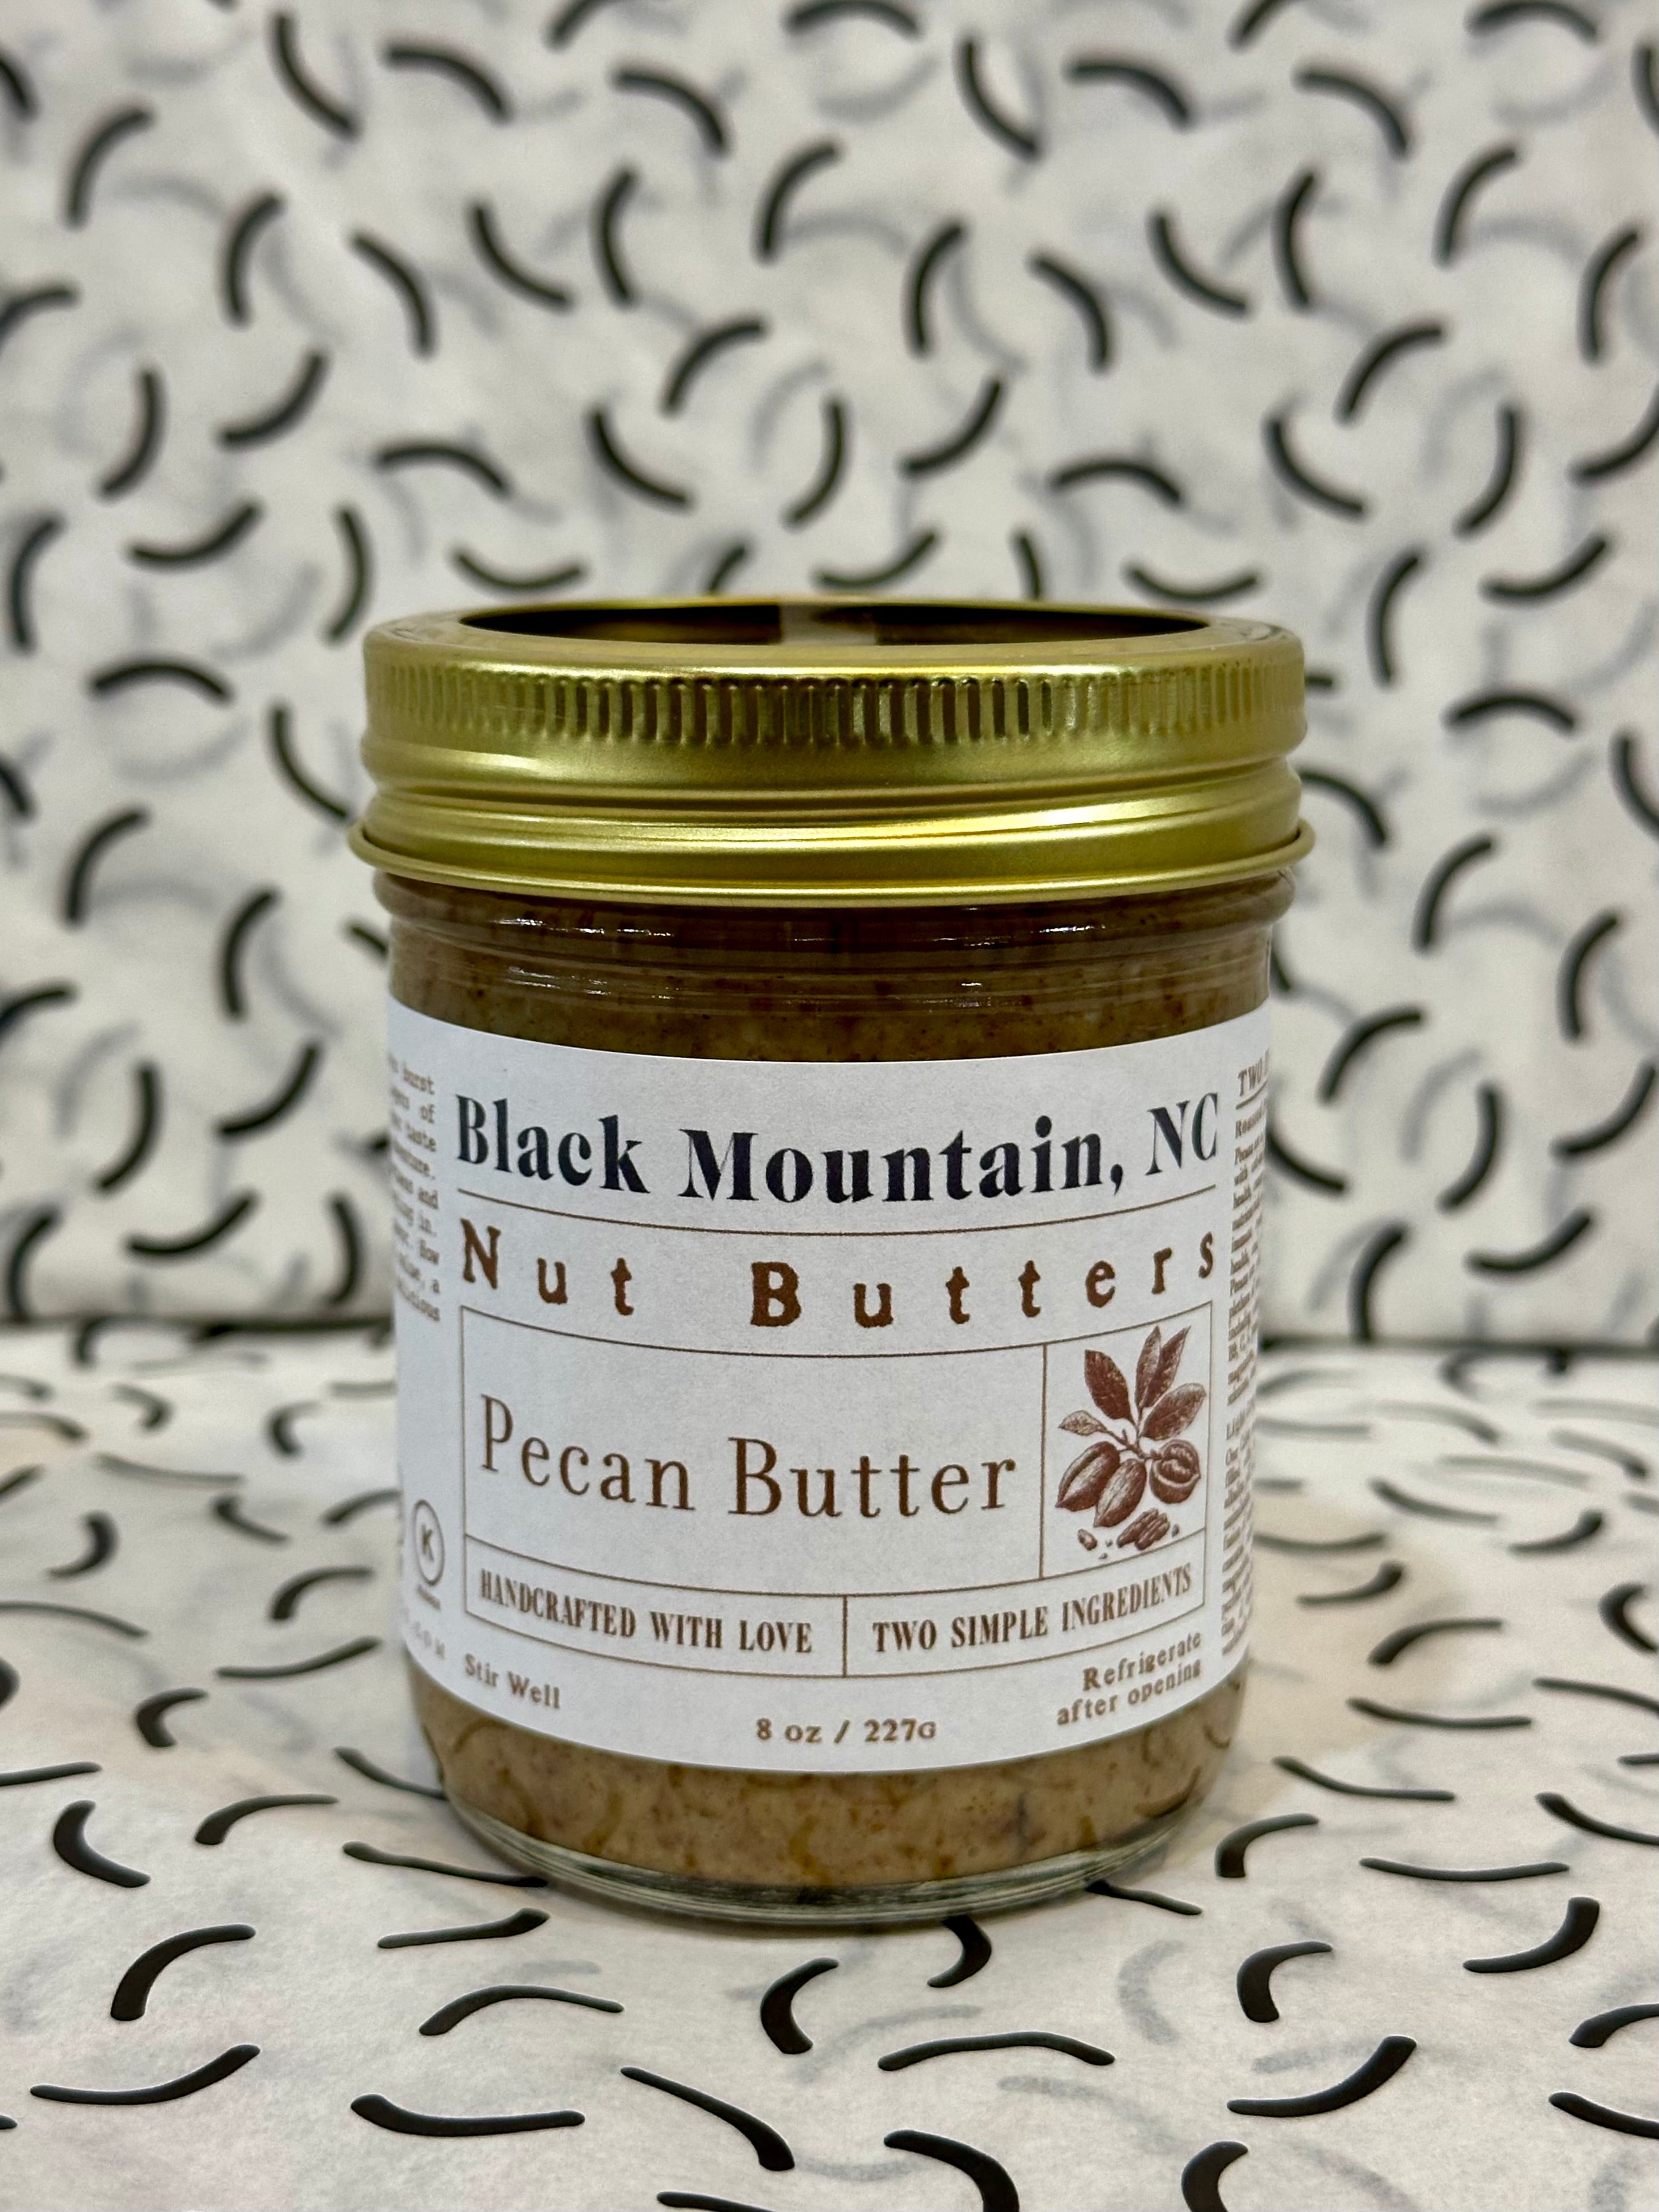 Black Mountain Nut Butters, Pecan